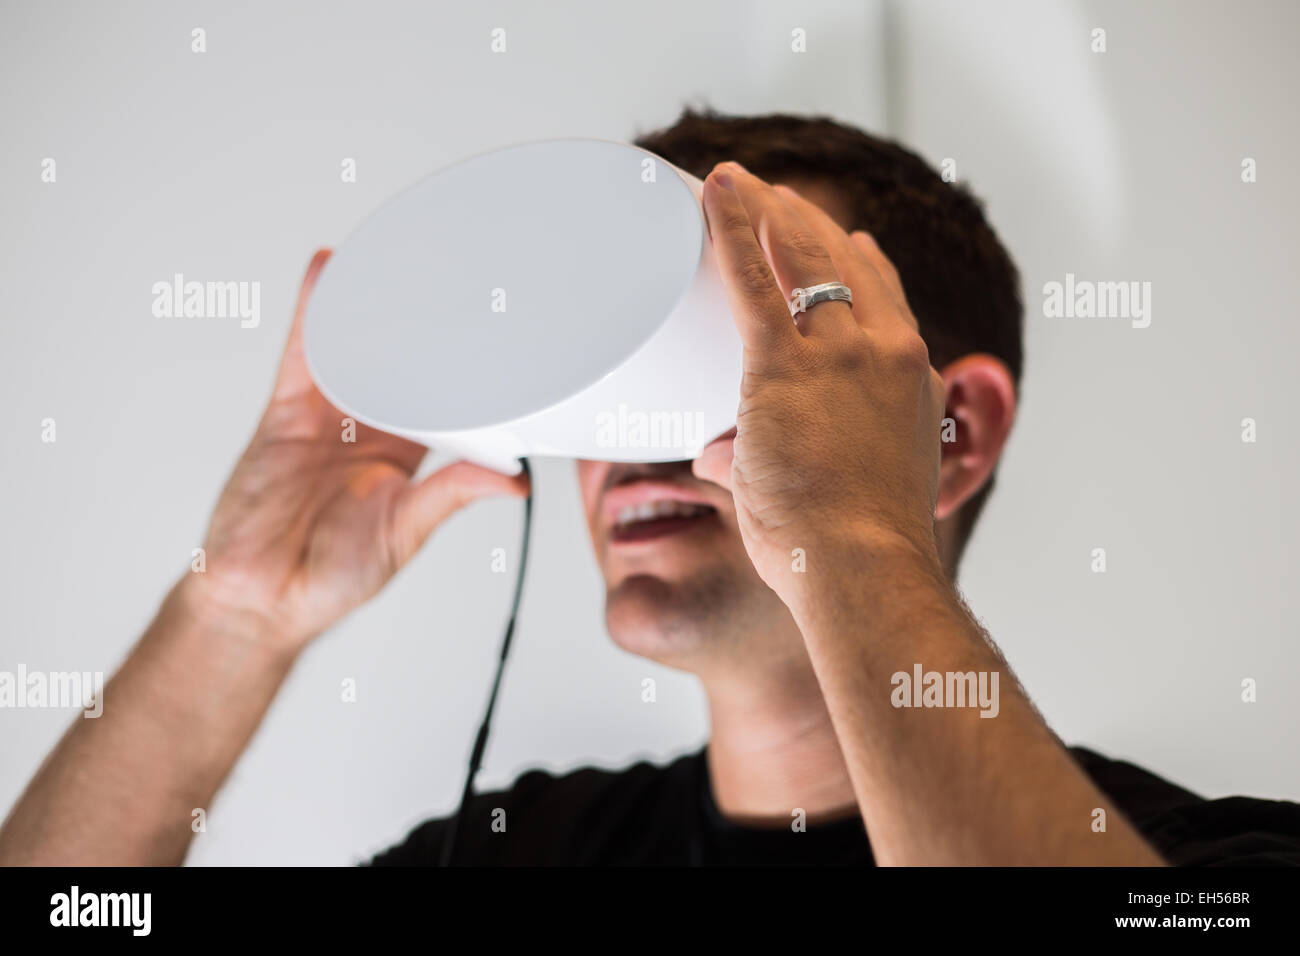 Virtual reality headset been worn Stock Photo